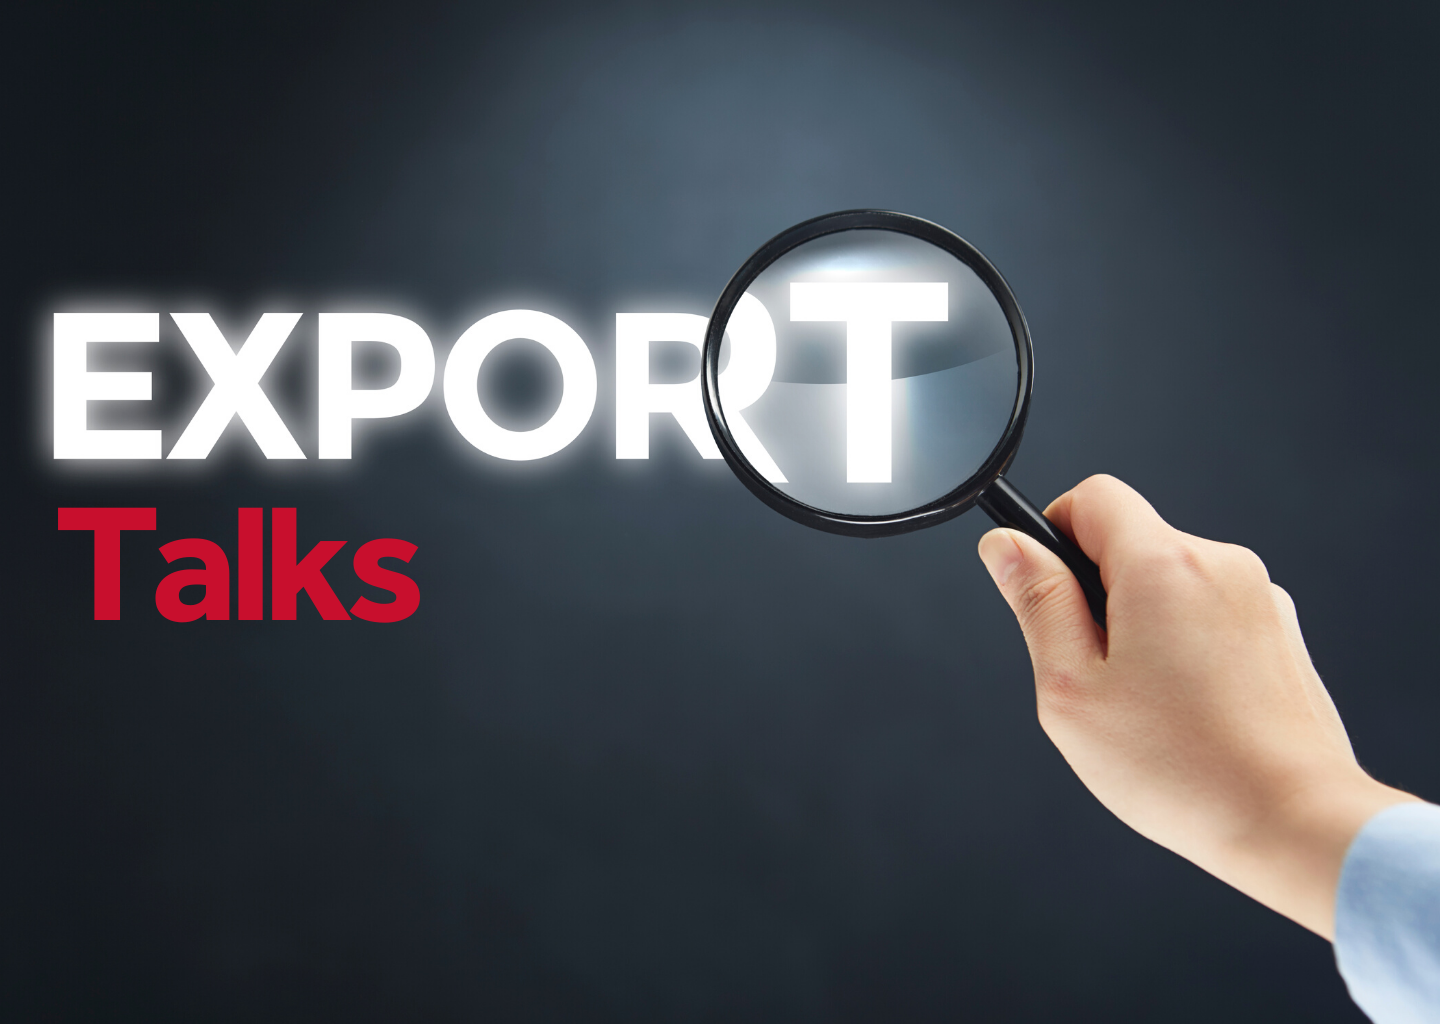 Export Talks